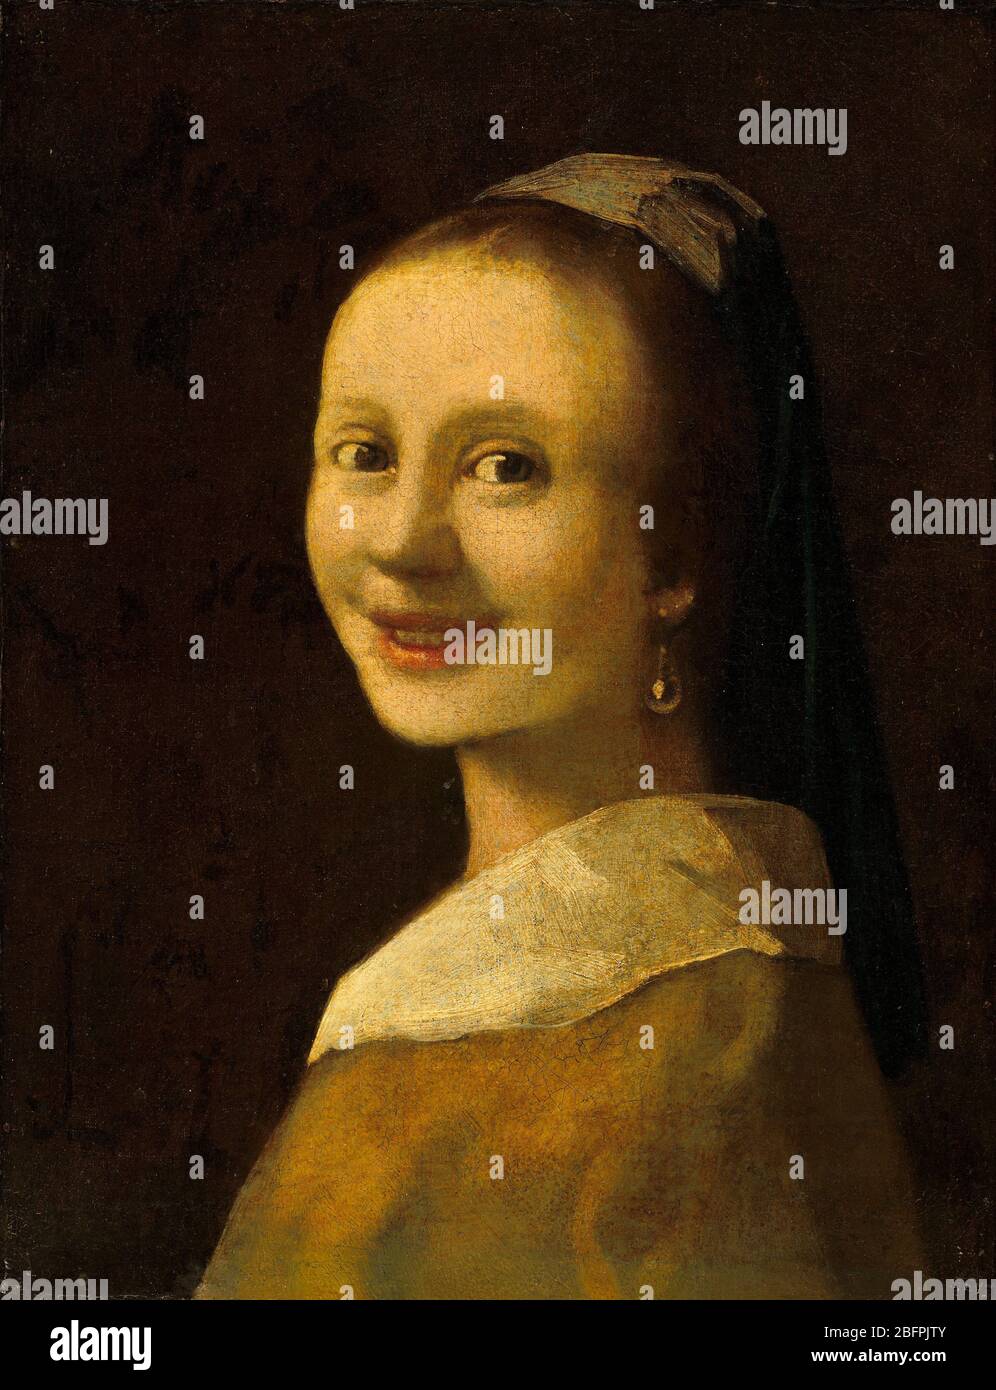 Sorridente ragazza, falsificazione molto probabilmente dipinto da Han van Meegeren imitatore anonimo di Johannes Vermeer falso vermeer Foto Stock